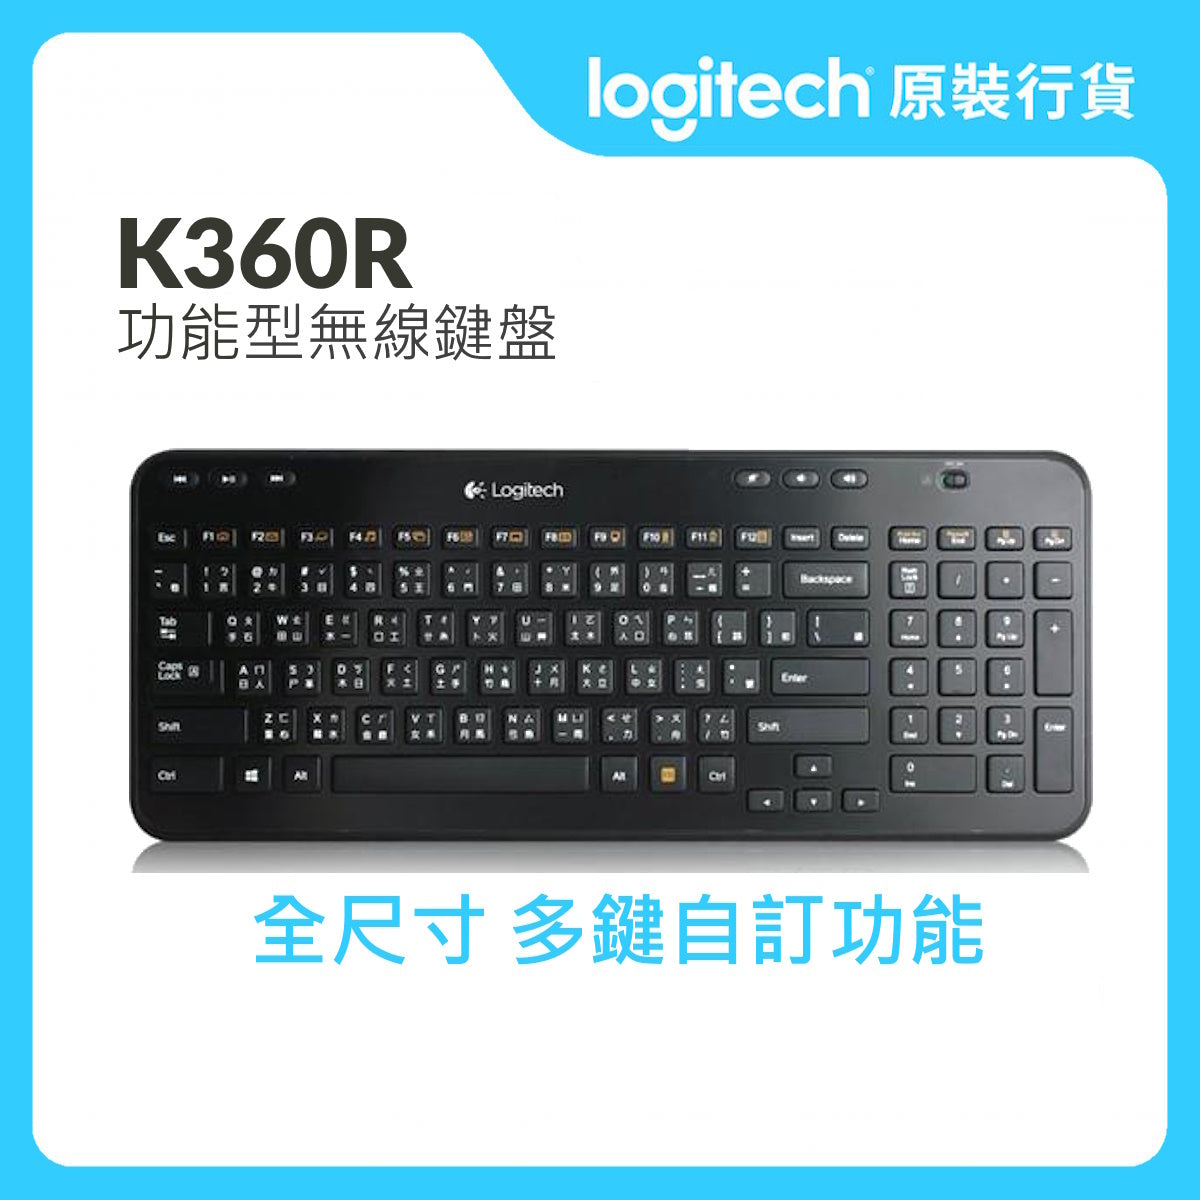 K360R - 中文 - 精巧無線鍵盤 (920-004562)